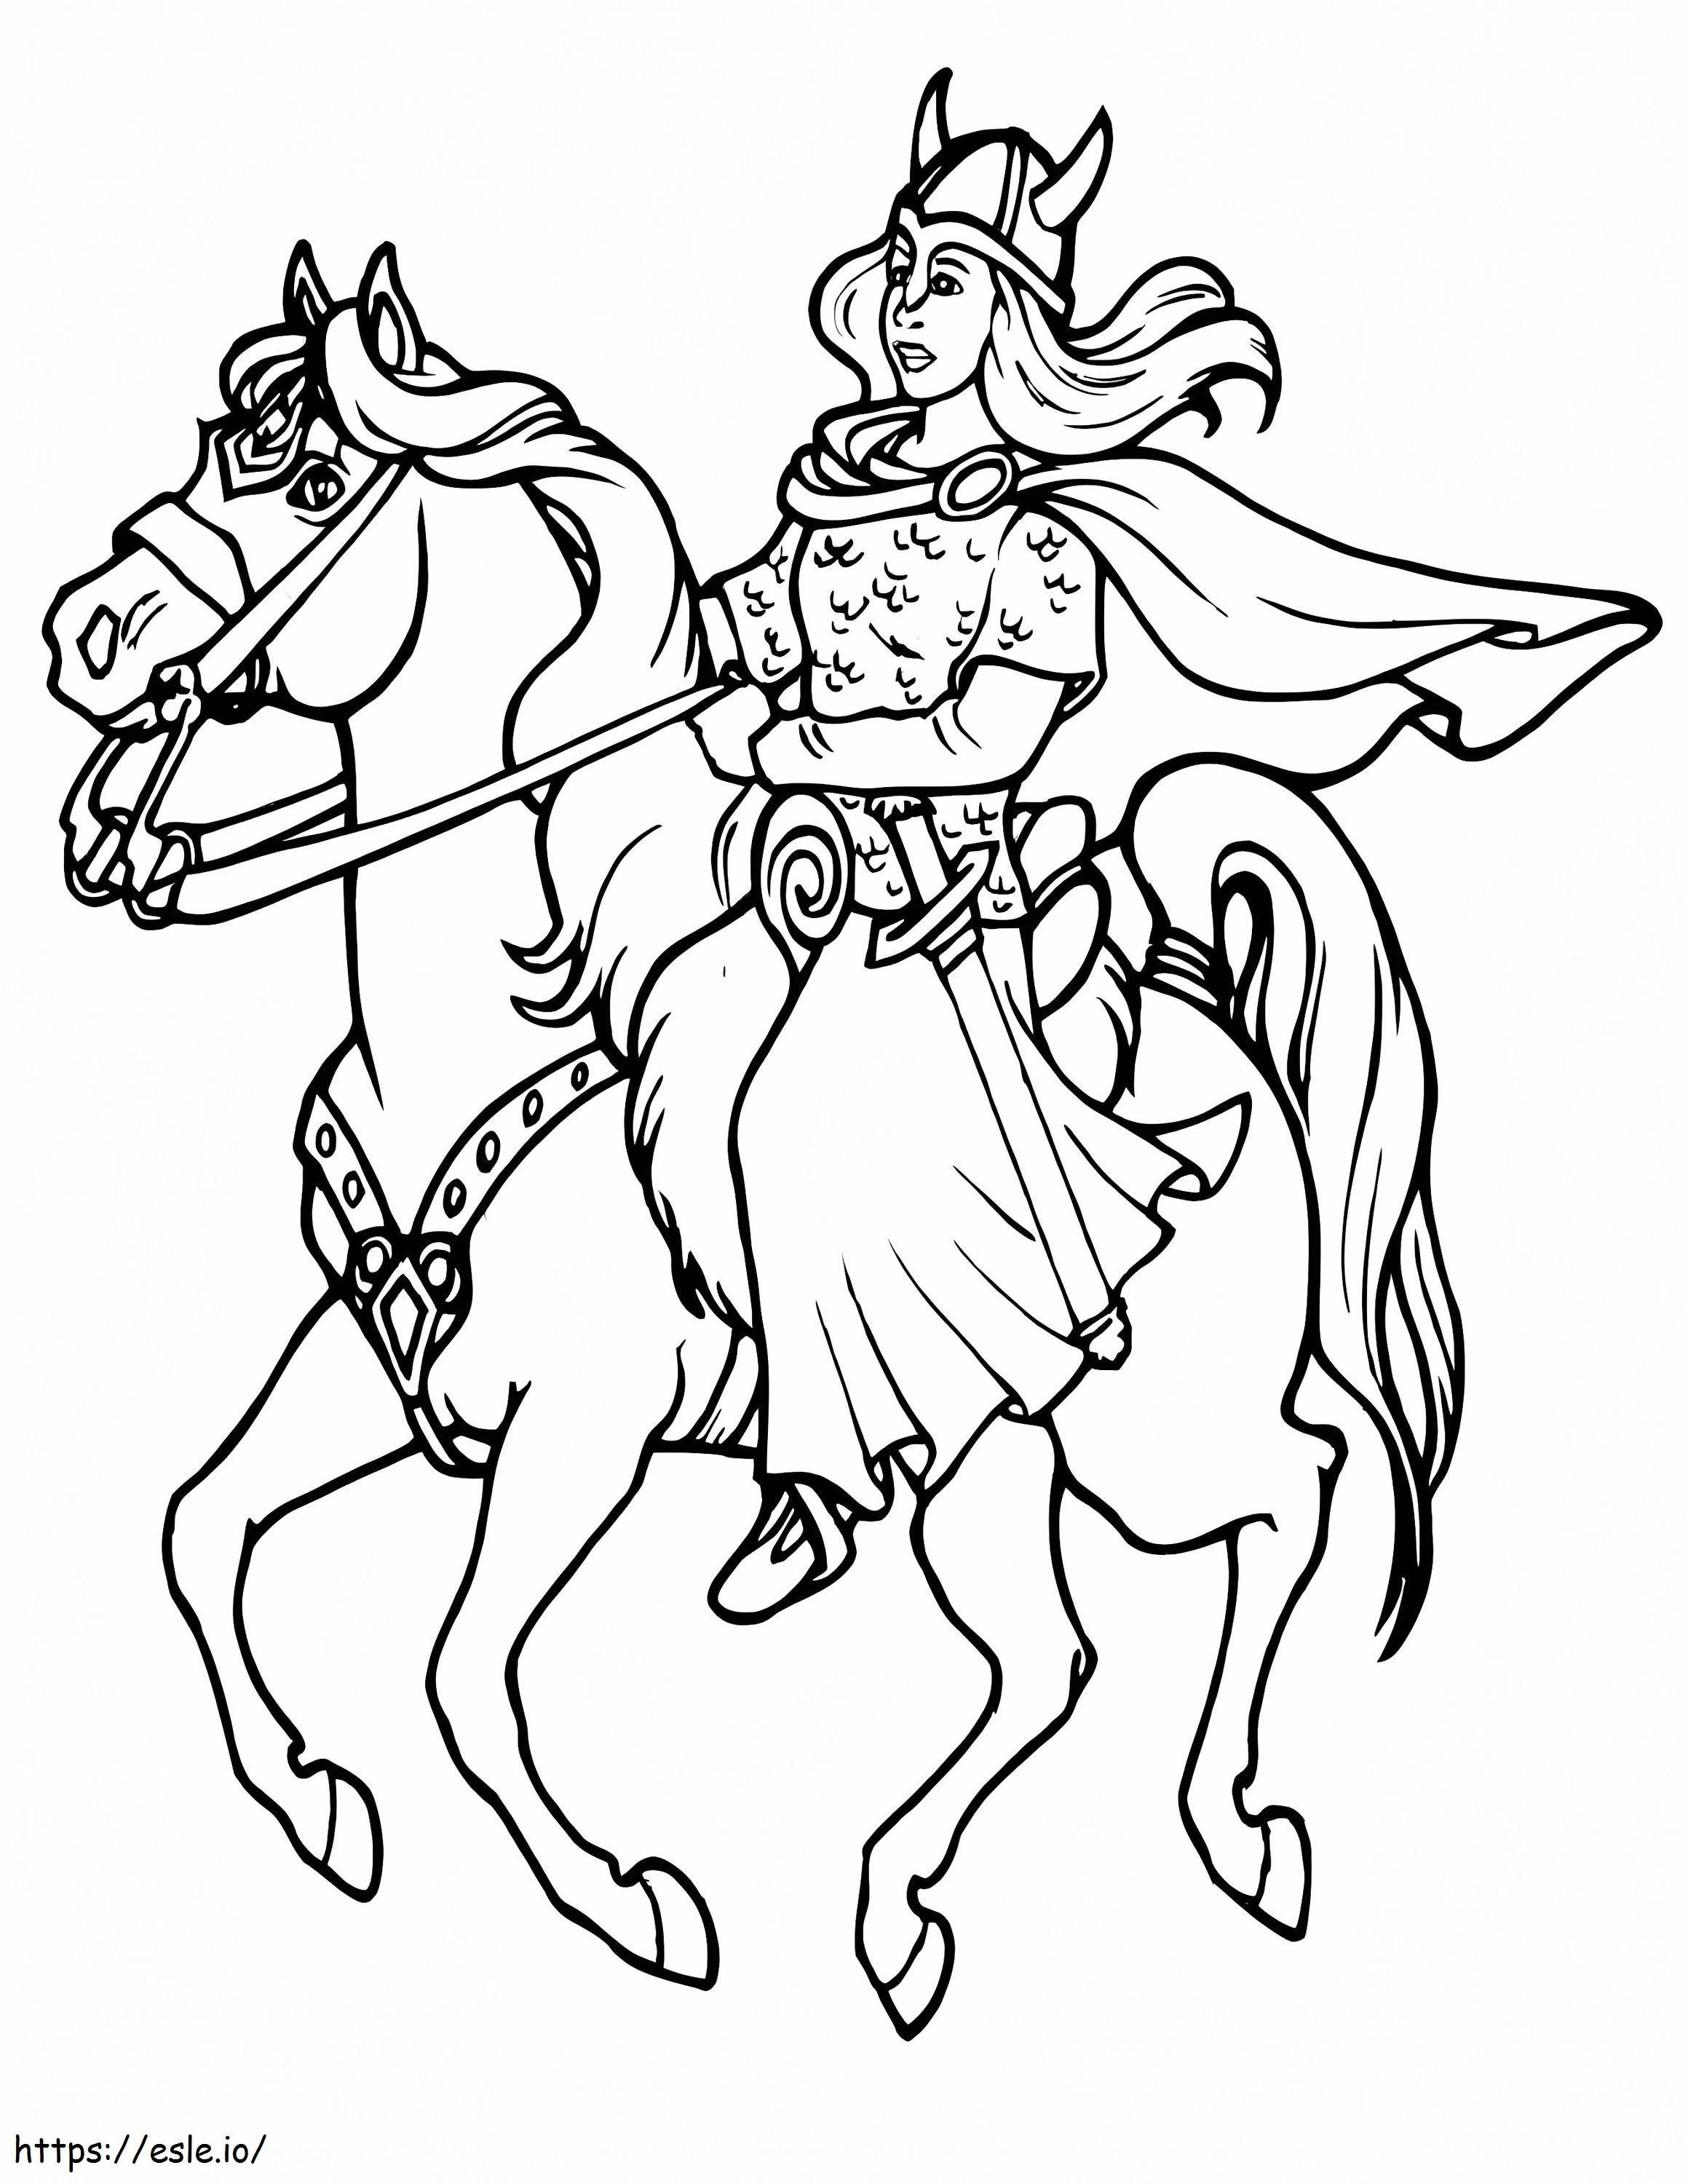 Atlı Viking boyama